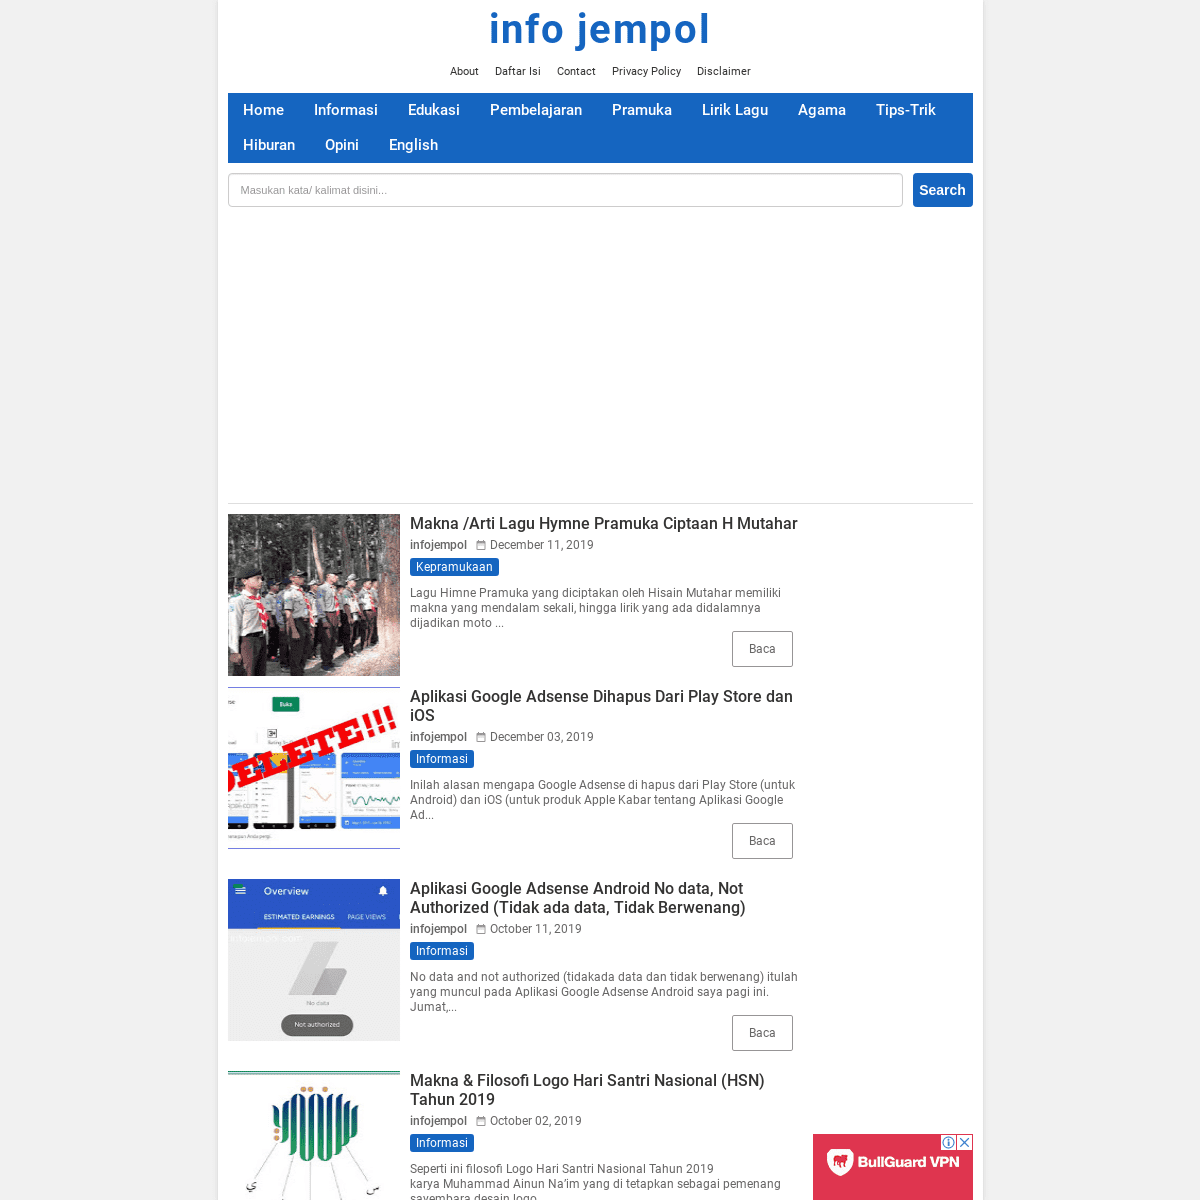 A complete backup of infojempol.com